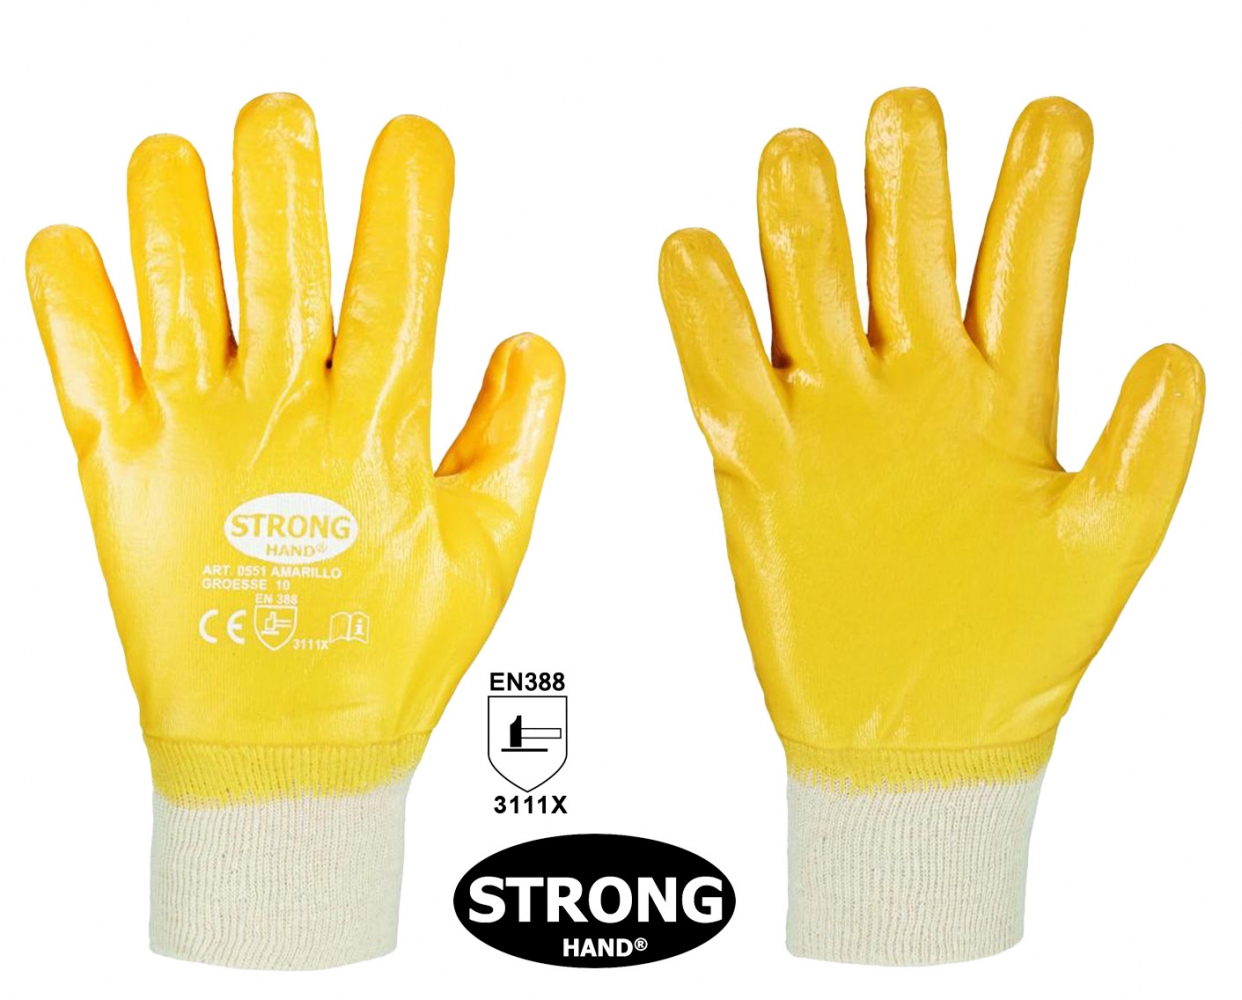 pics/Feldtmann 2016/Handschutz/stronghand/stronghand-0551-amarillo-robuste-und-flexible-nitril-handschuhe-en388-03.jpg